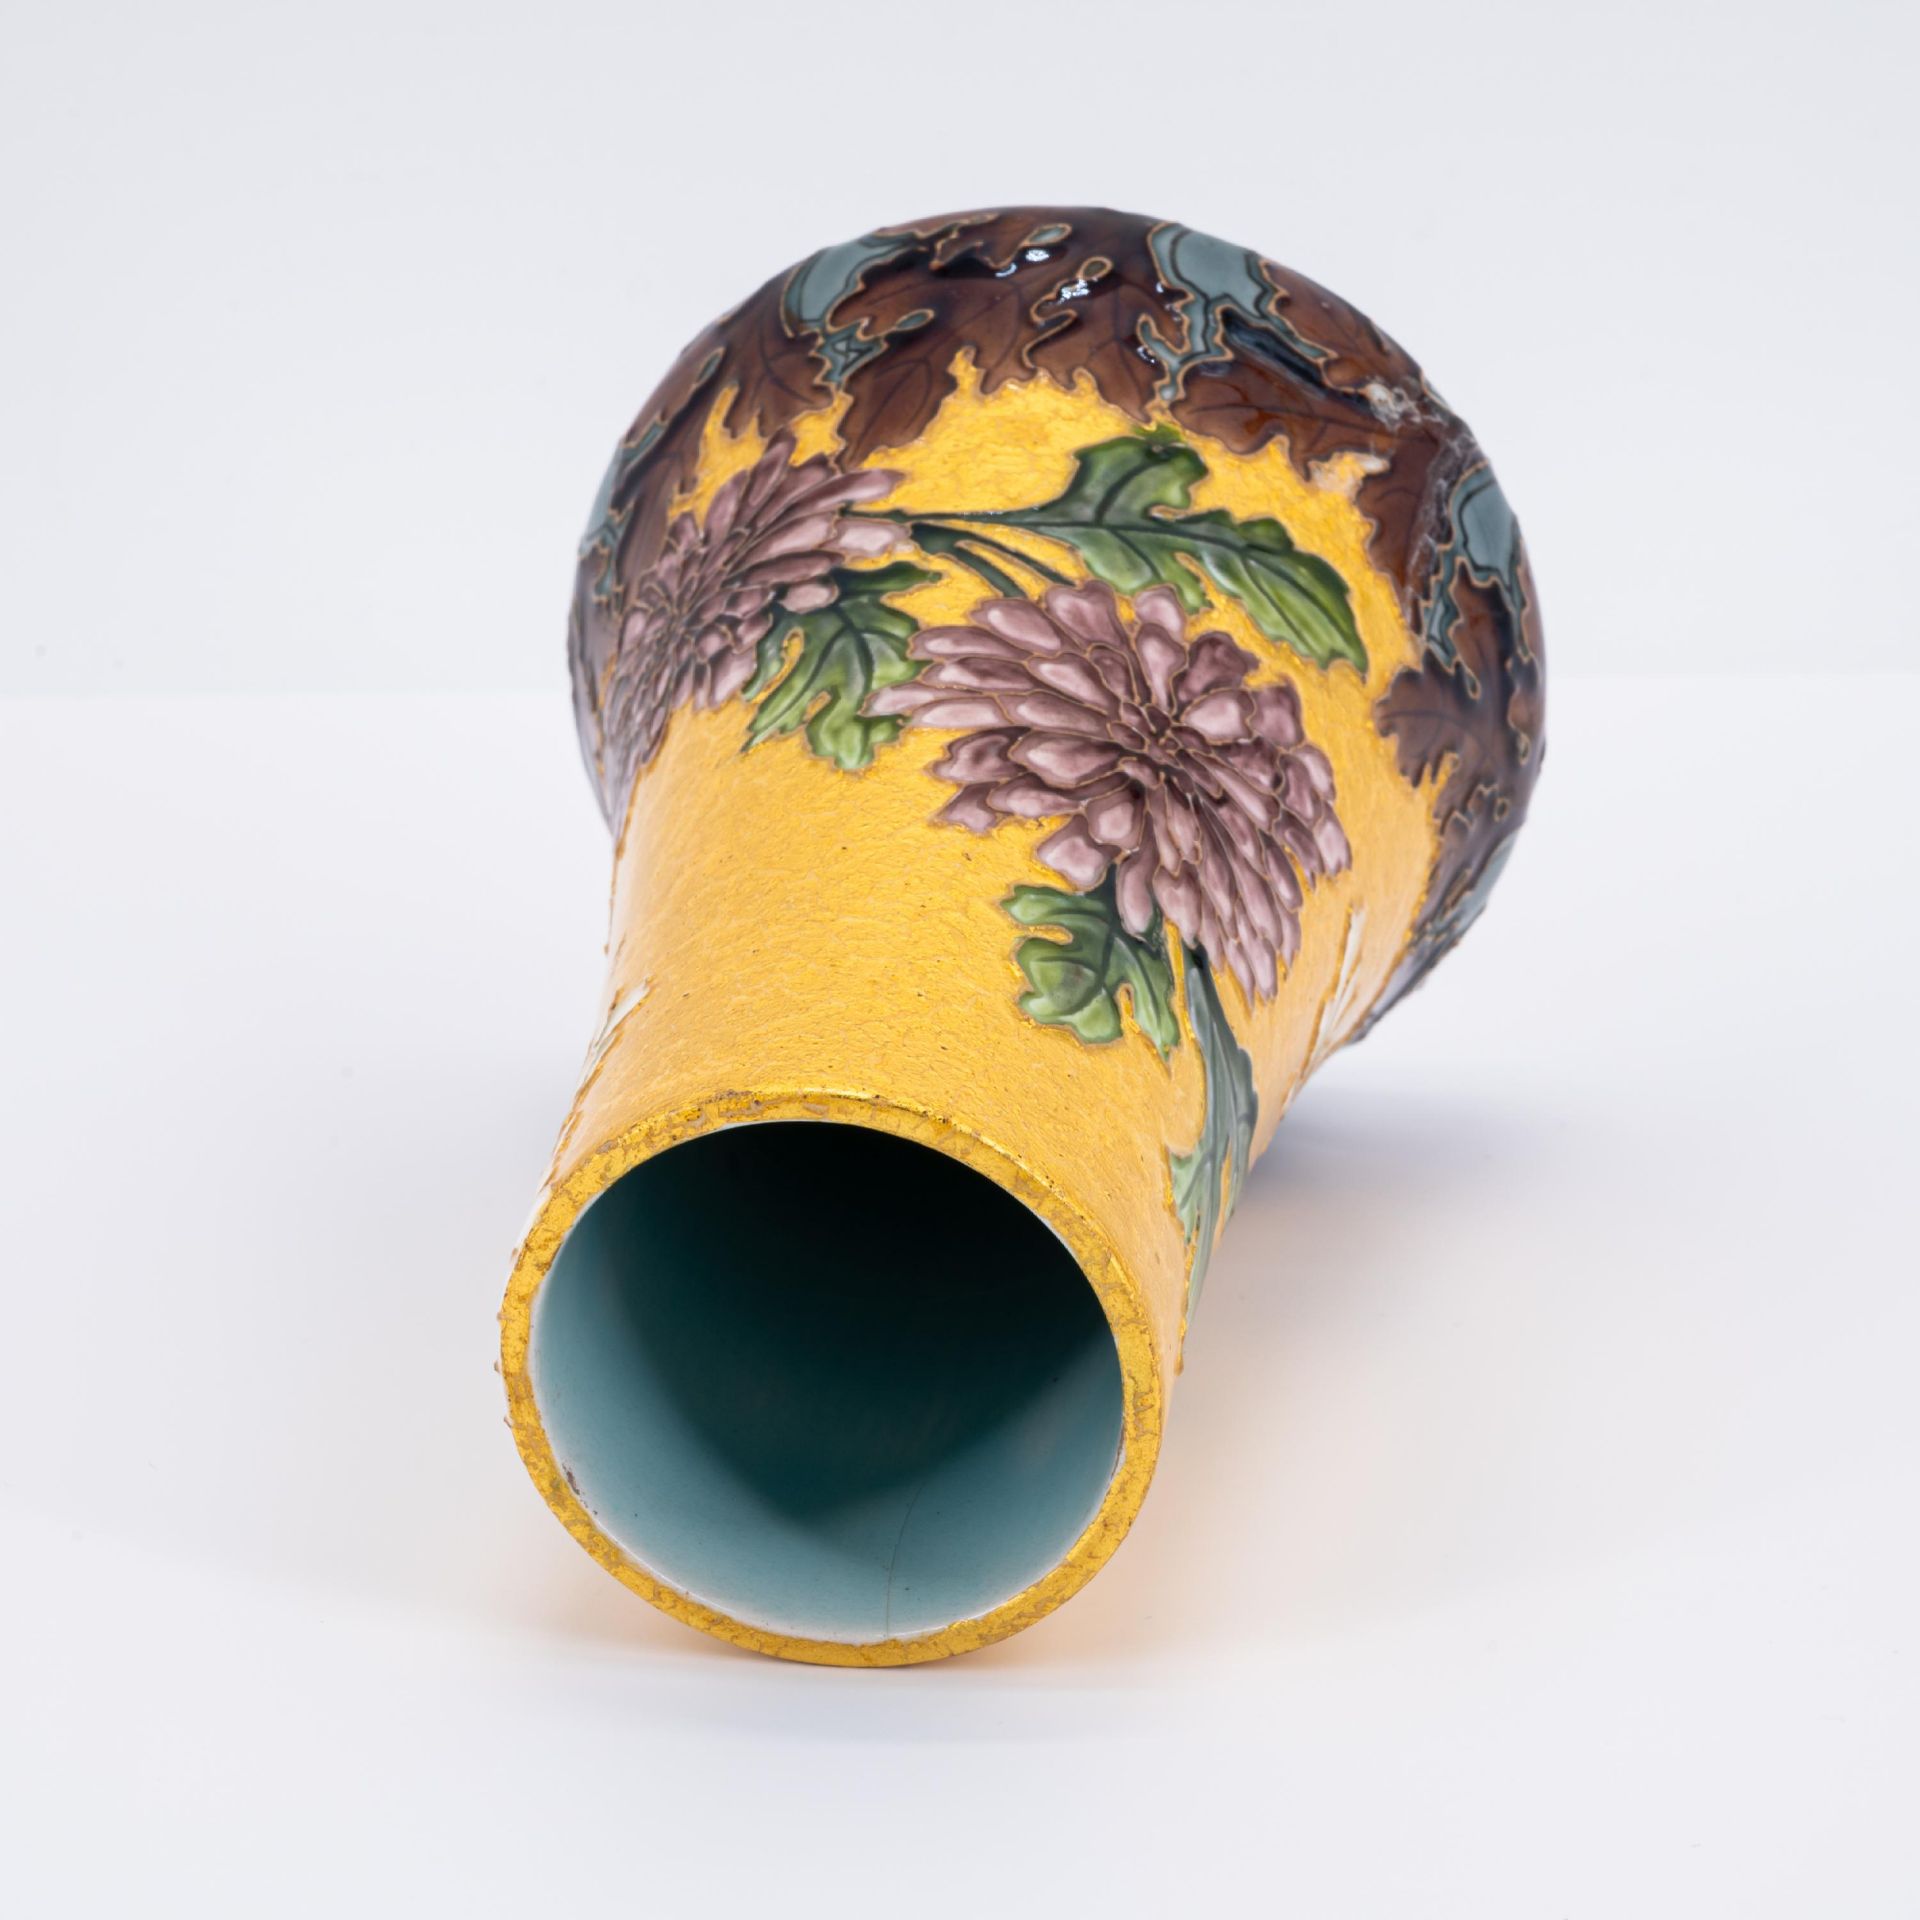 Slim vase with chrysanthemum decor - Image 5 of 6